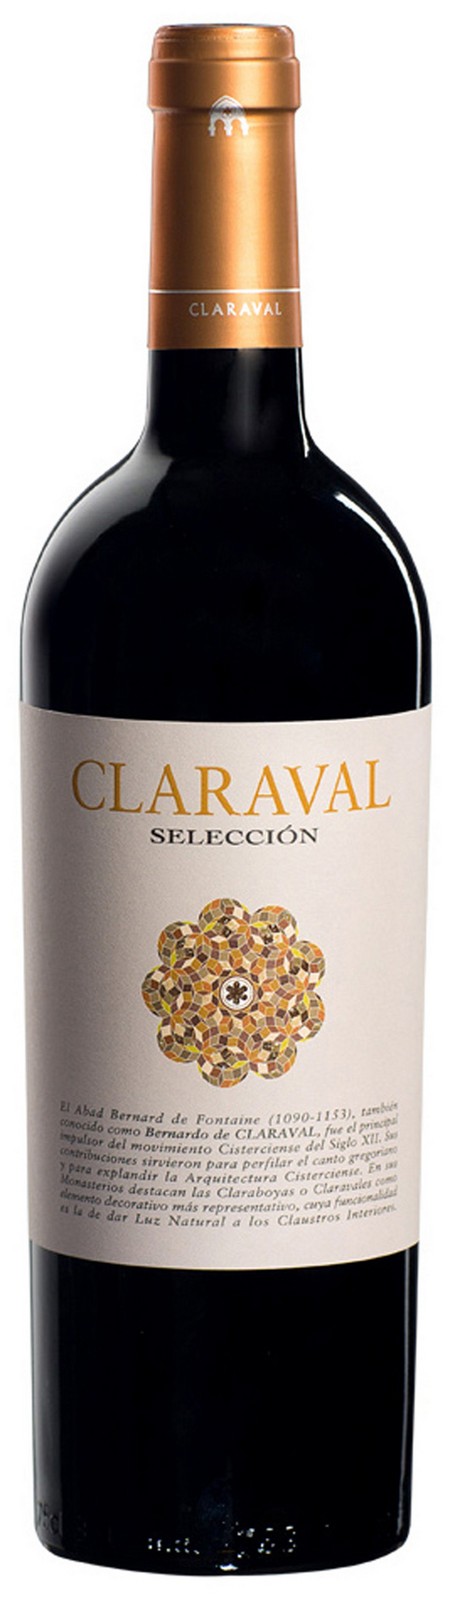 claraval-seleccion-2013